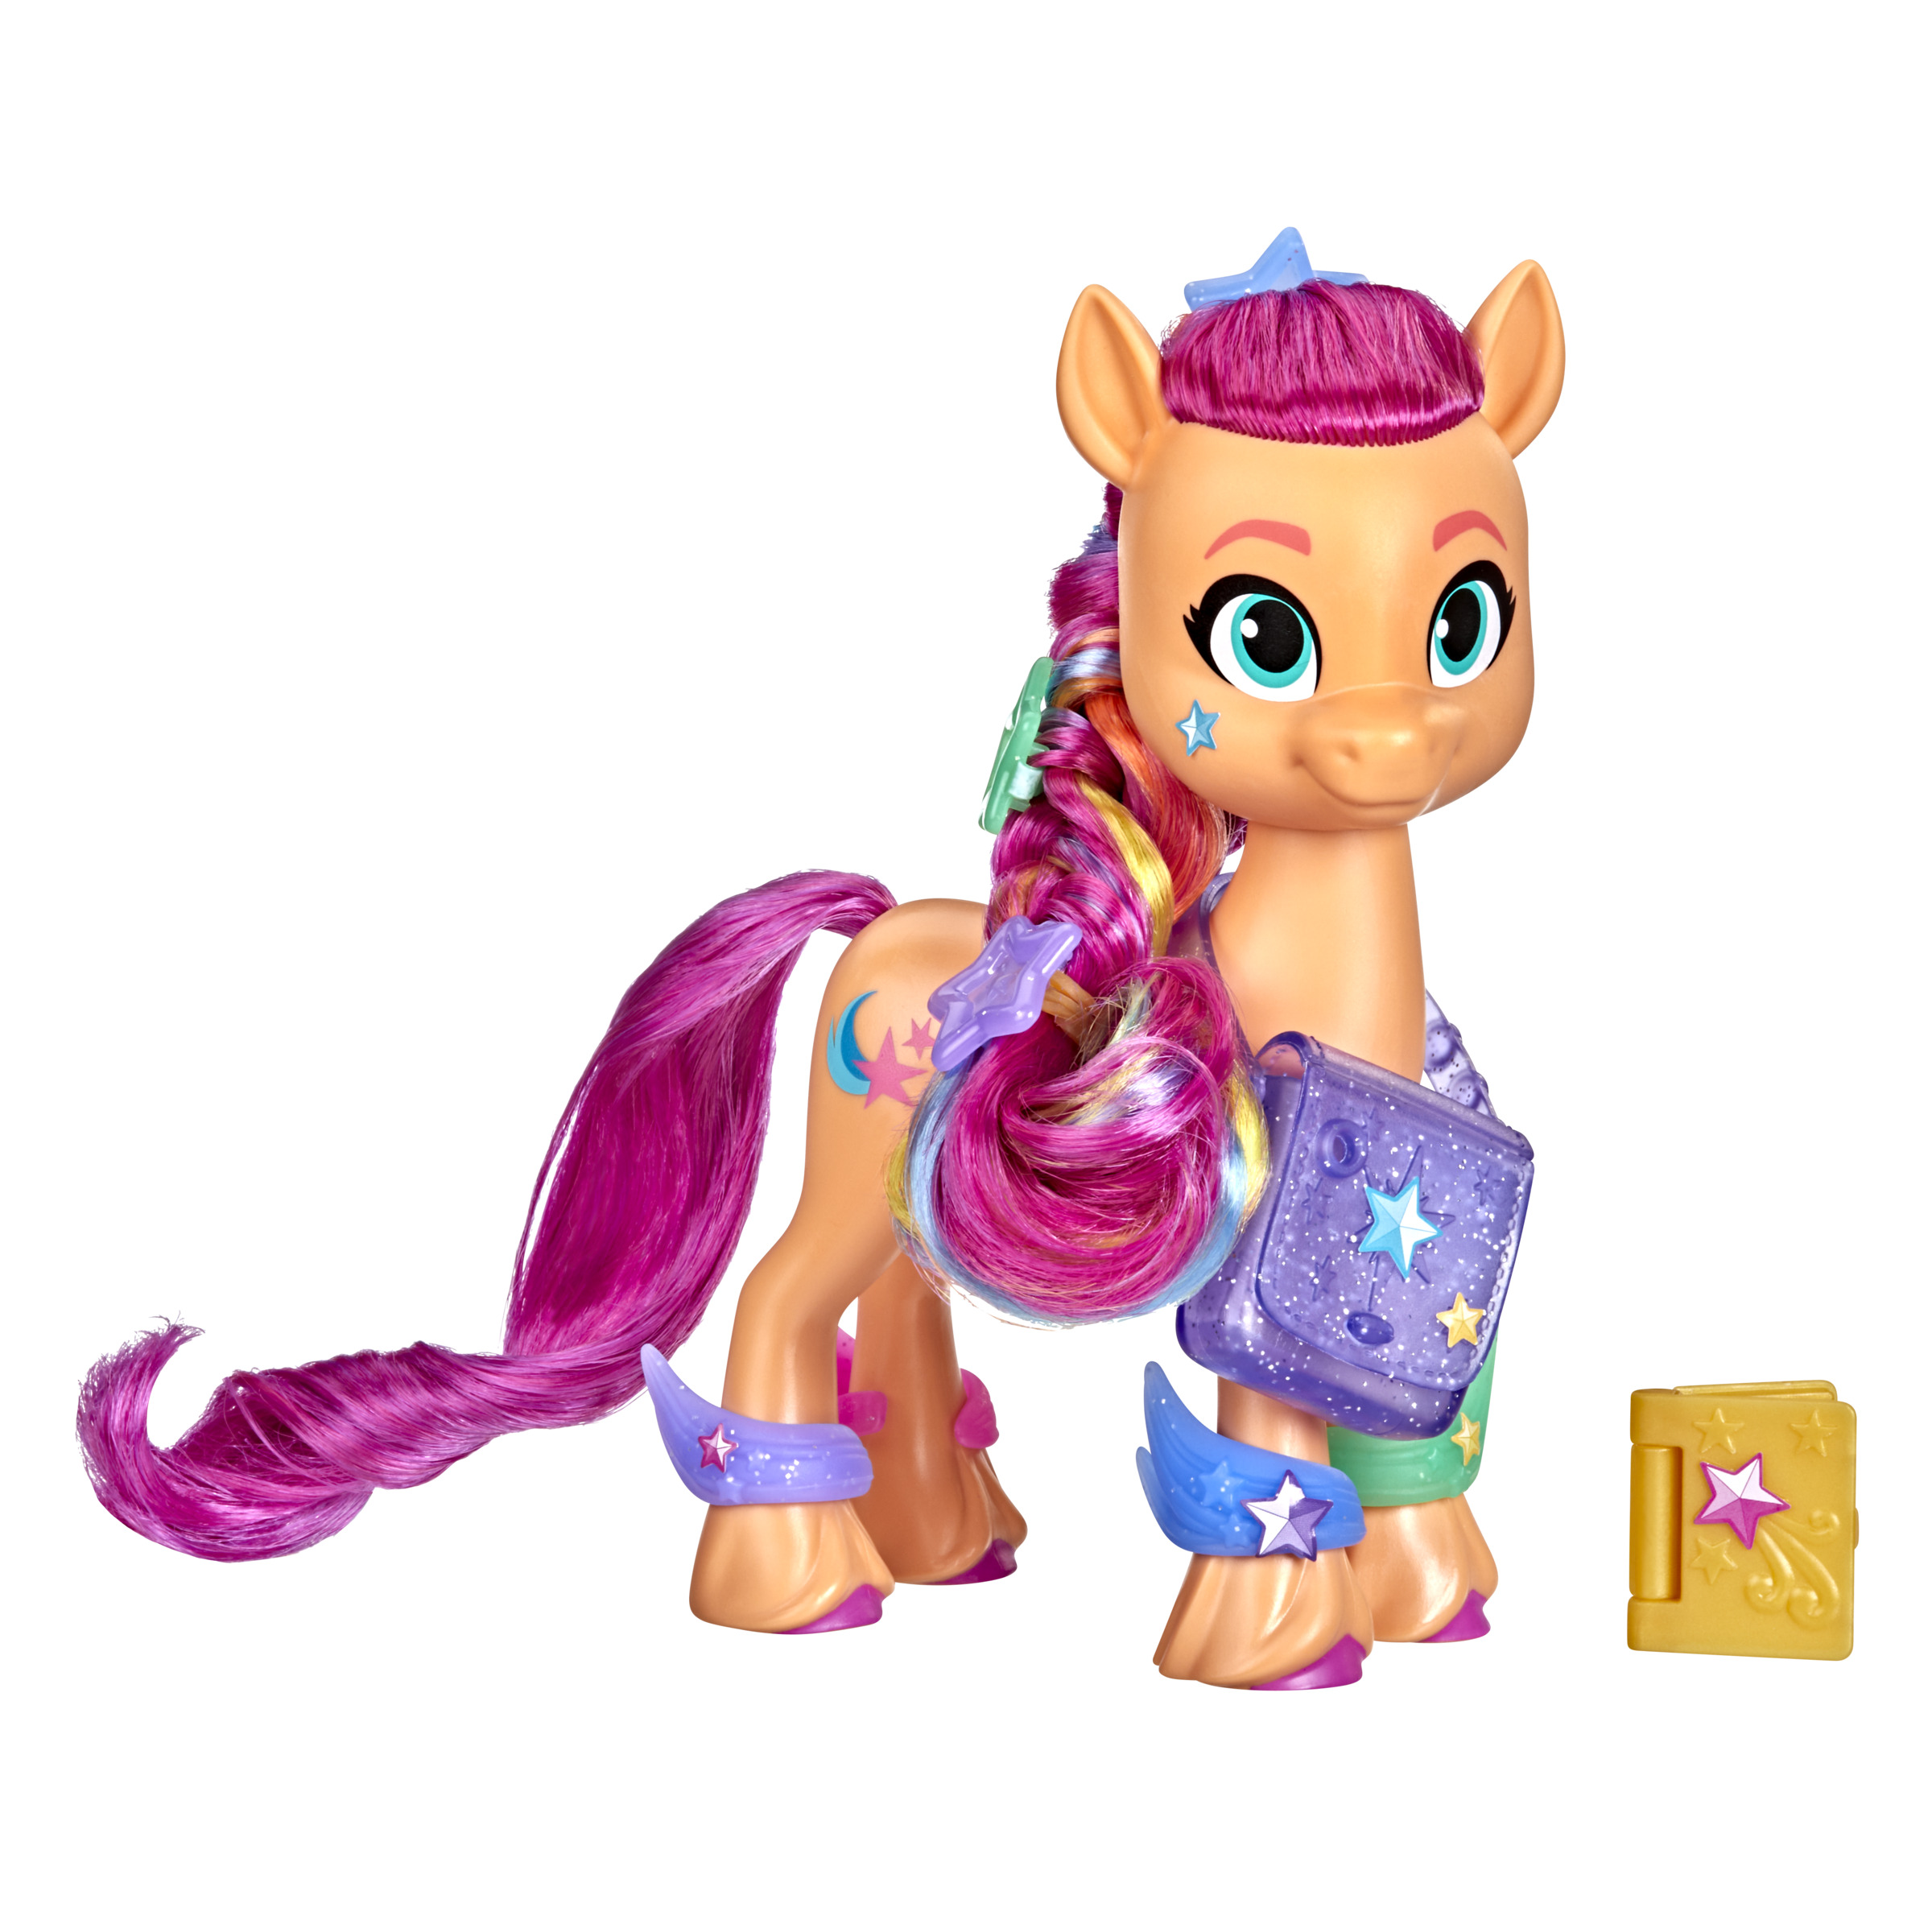 MY LITTLE PONY My - Sunny Generation Starscout New Pony: Little A Peinados Figura mágicos